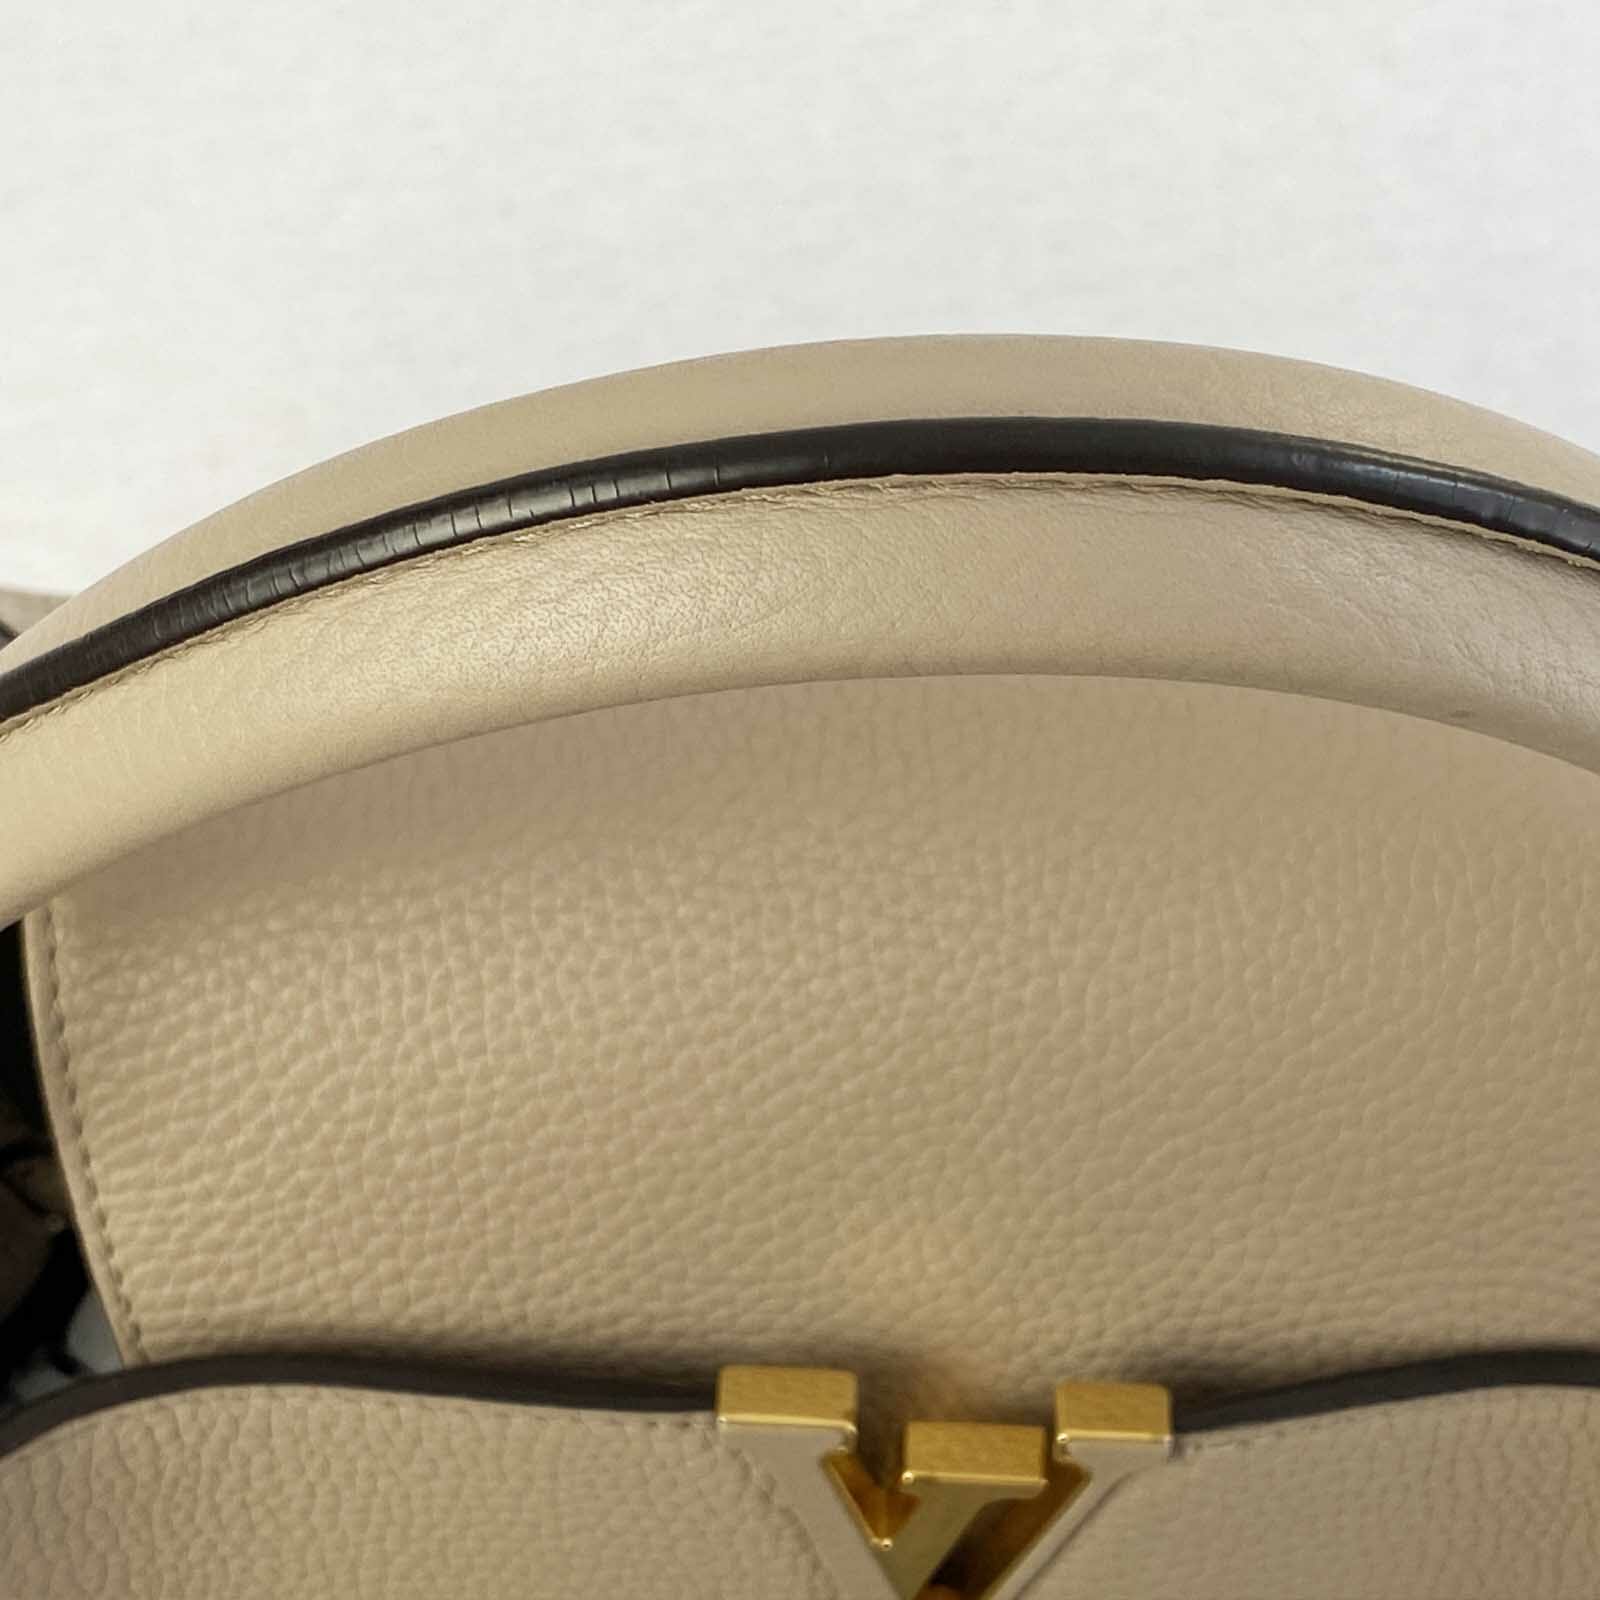 Louis Vuitton Capucines GM Top Handle Bag Black Leather For Sale